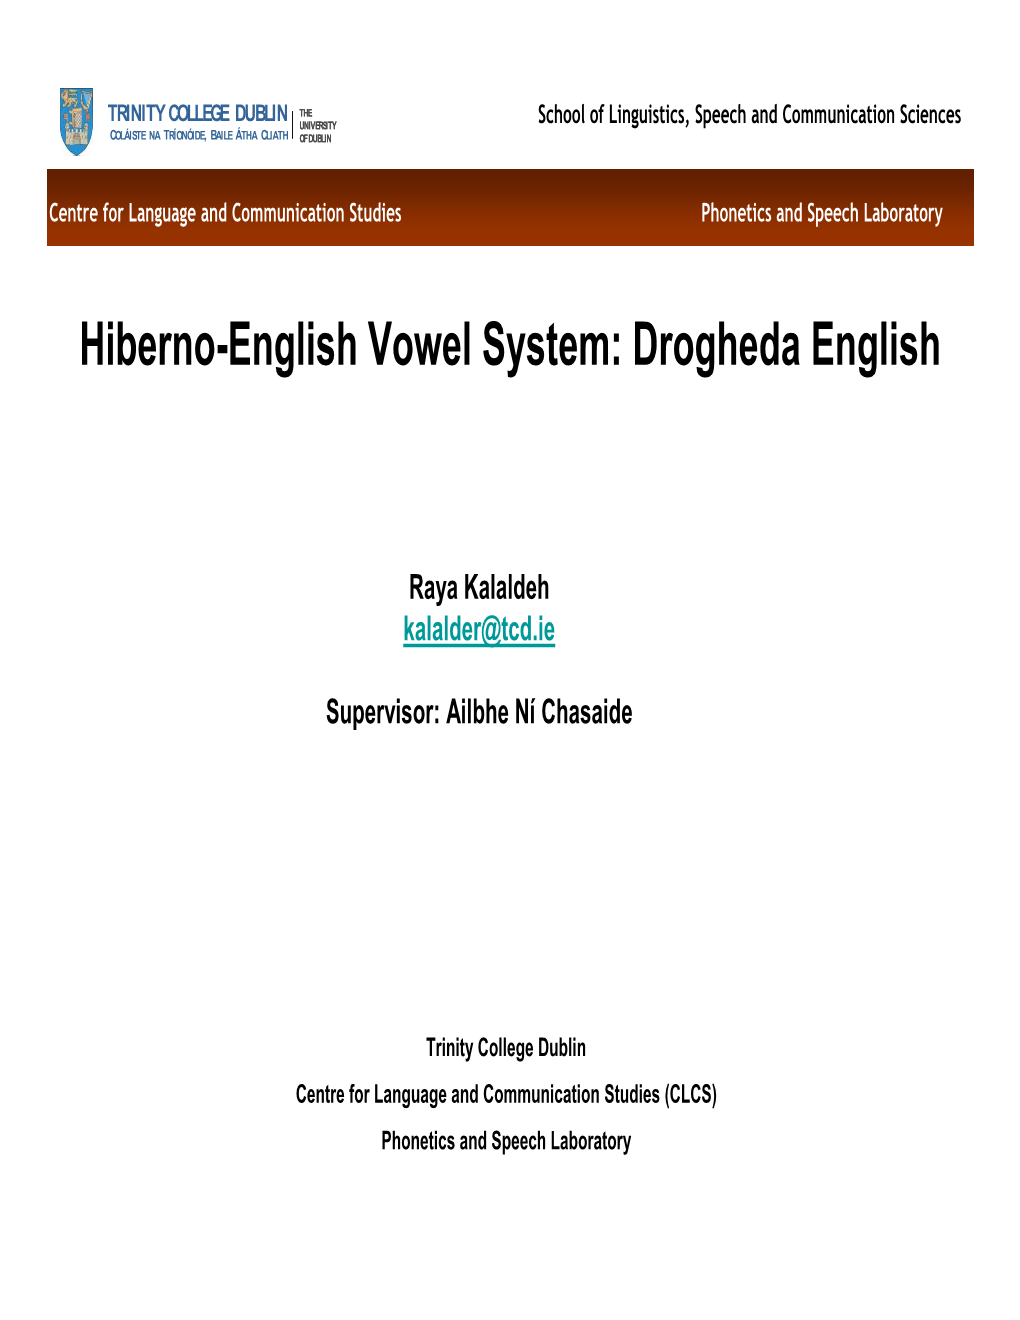 Hiberno-English Vowel System: Drogheda English